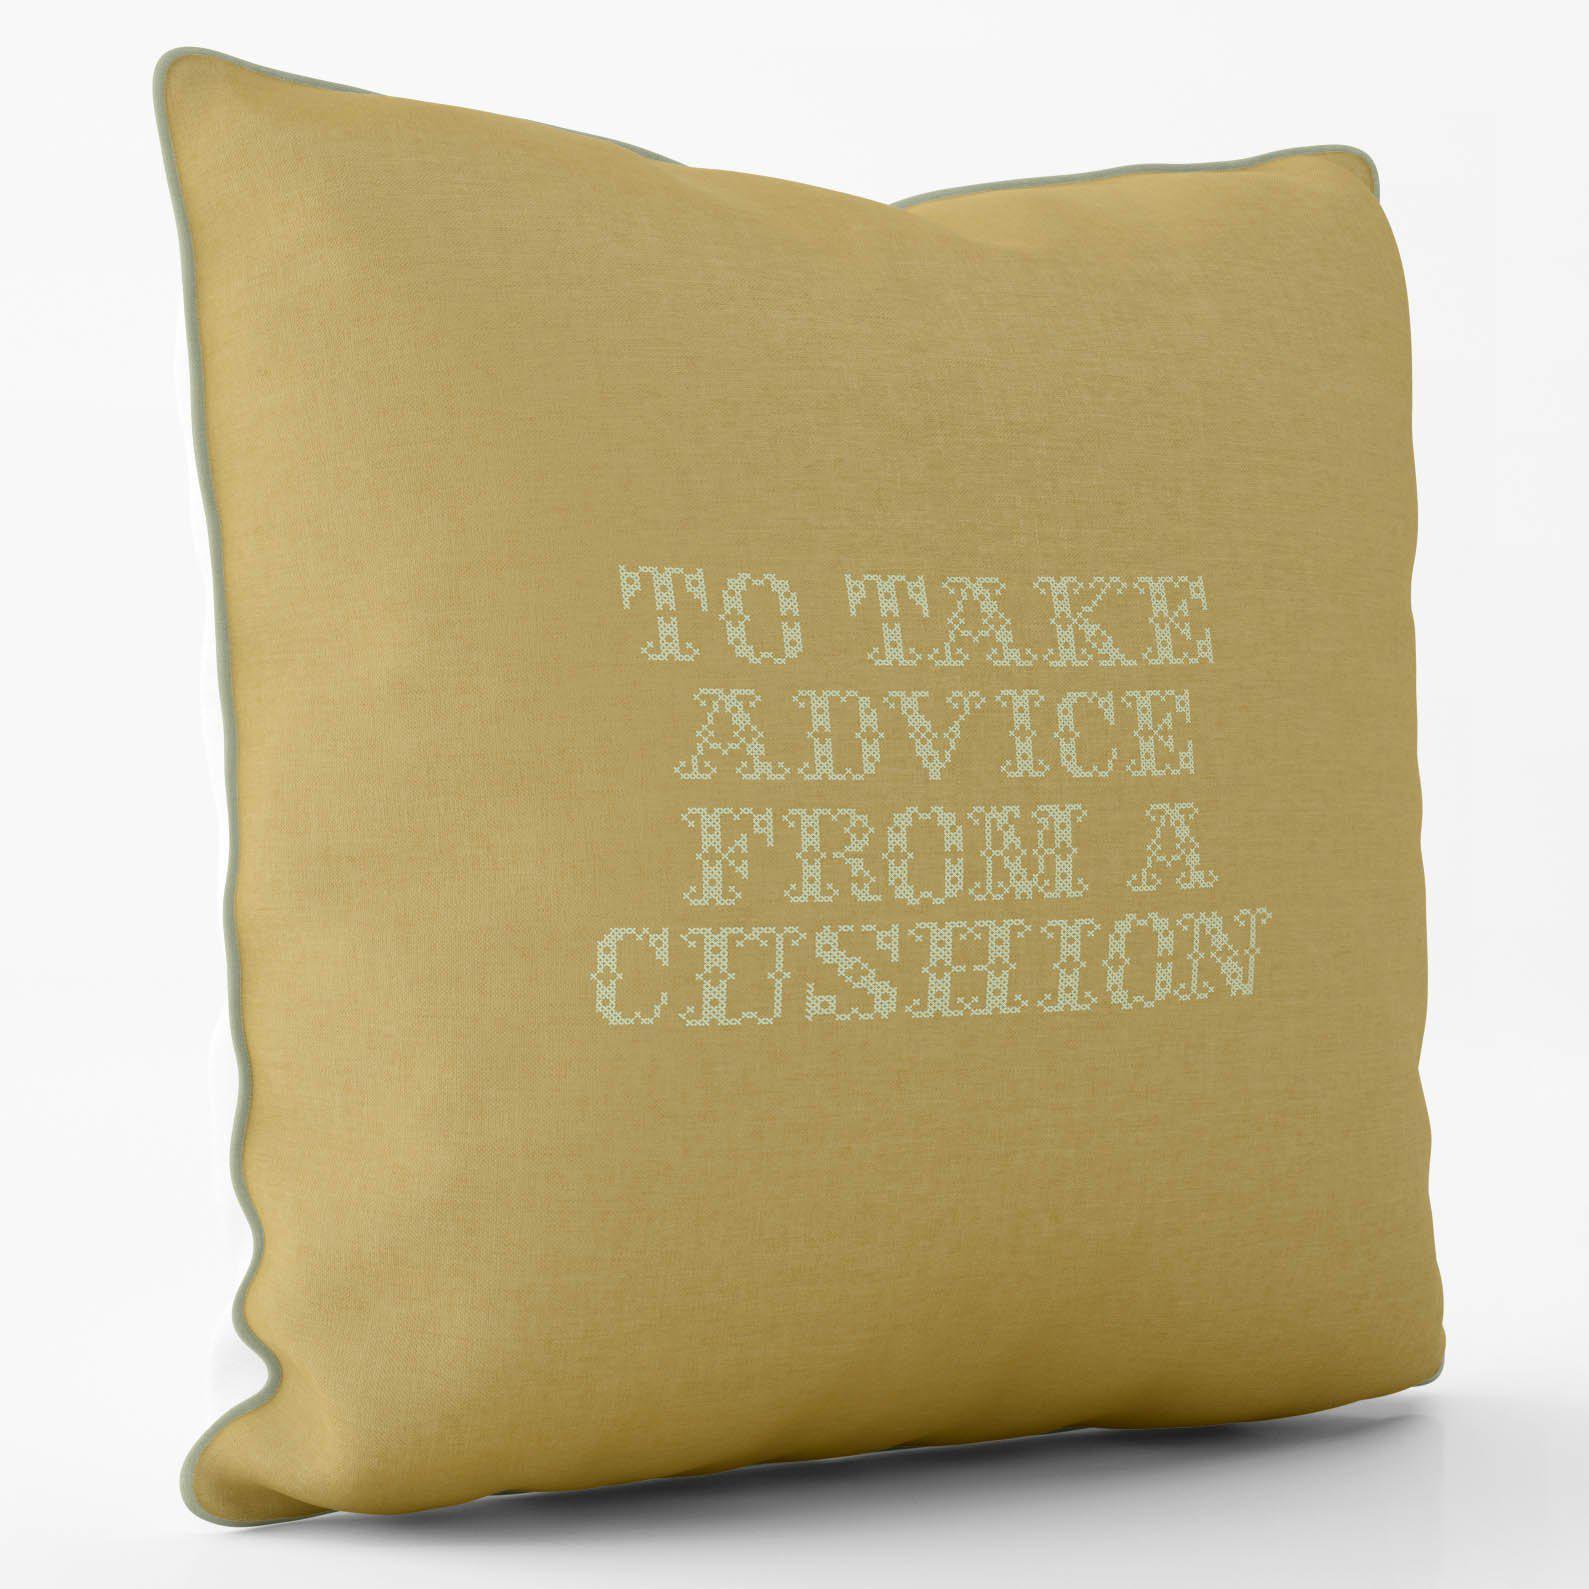 To Take Advice From A Cushion - Inspired - Graffiti Art Cushion - Handmade Cushions UK - WeLoveCushions